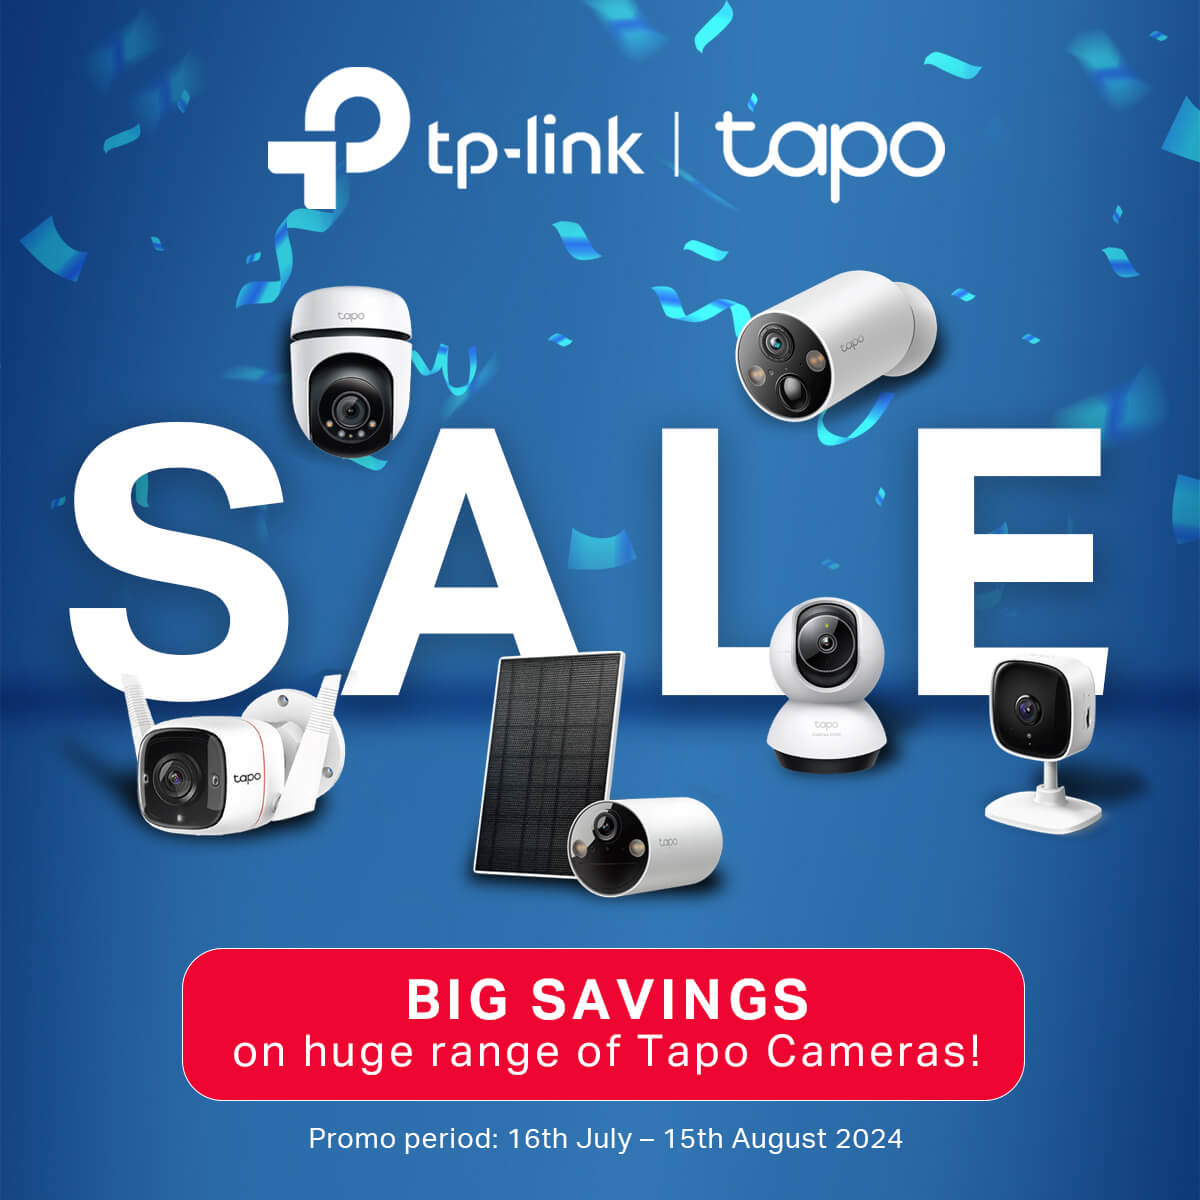 BIG SAVINGS on huge range of Tapo Cameras!